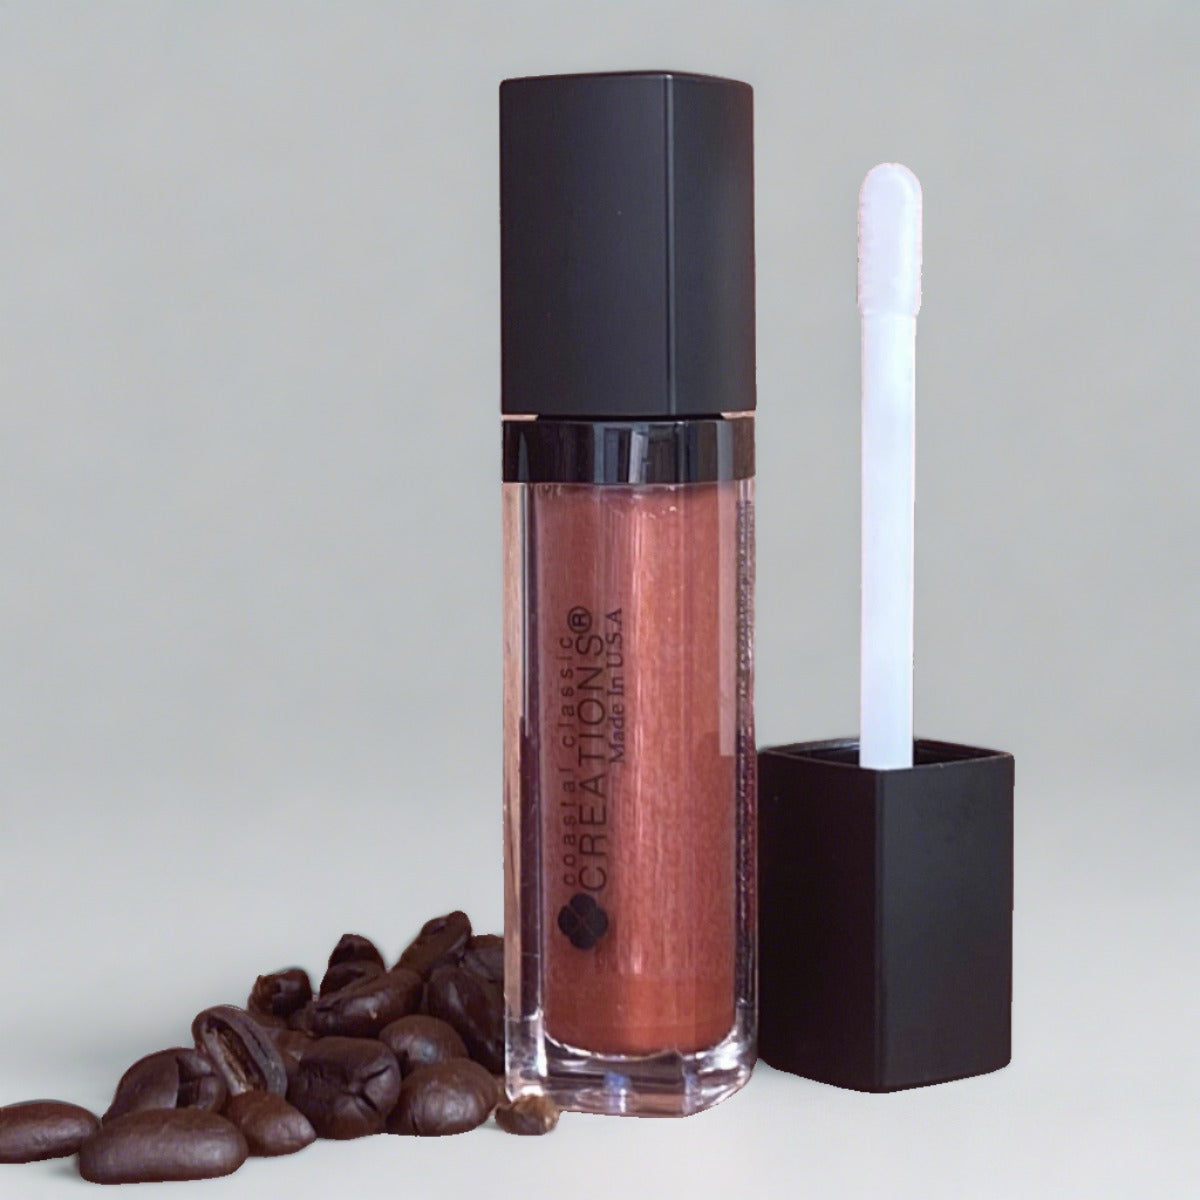 Java Chip High coverage reddish brown hemp lip gloss with coffee beans